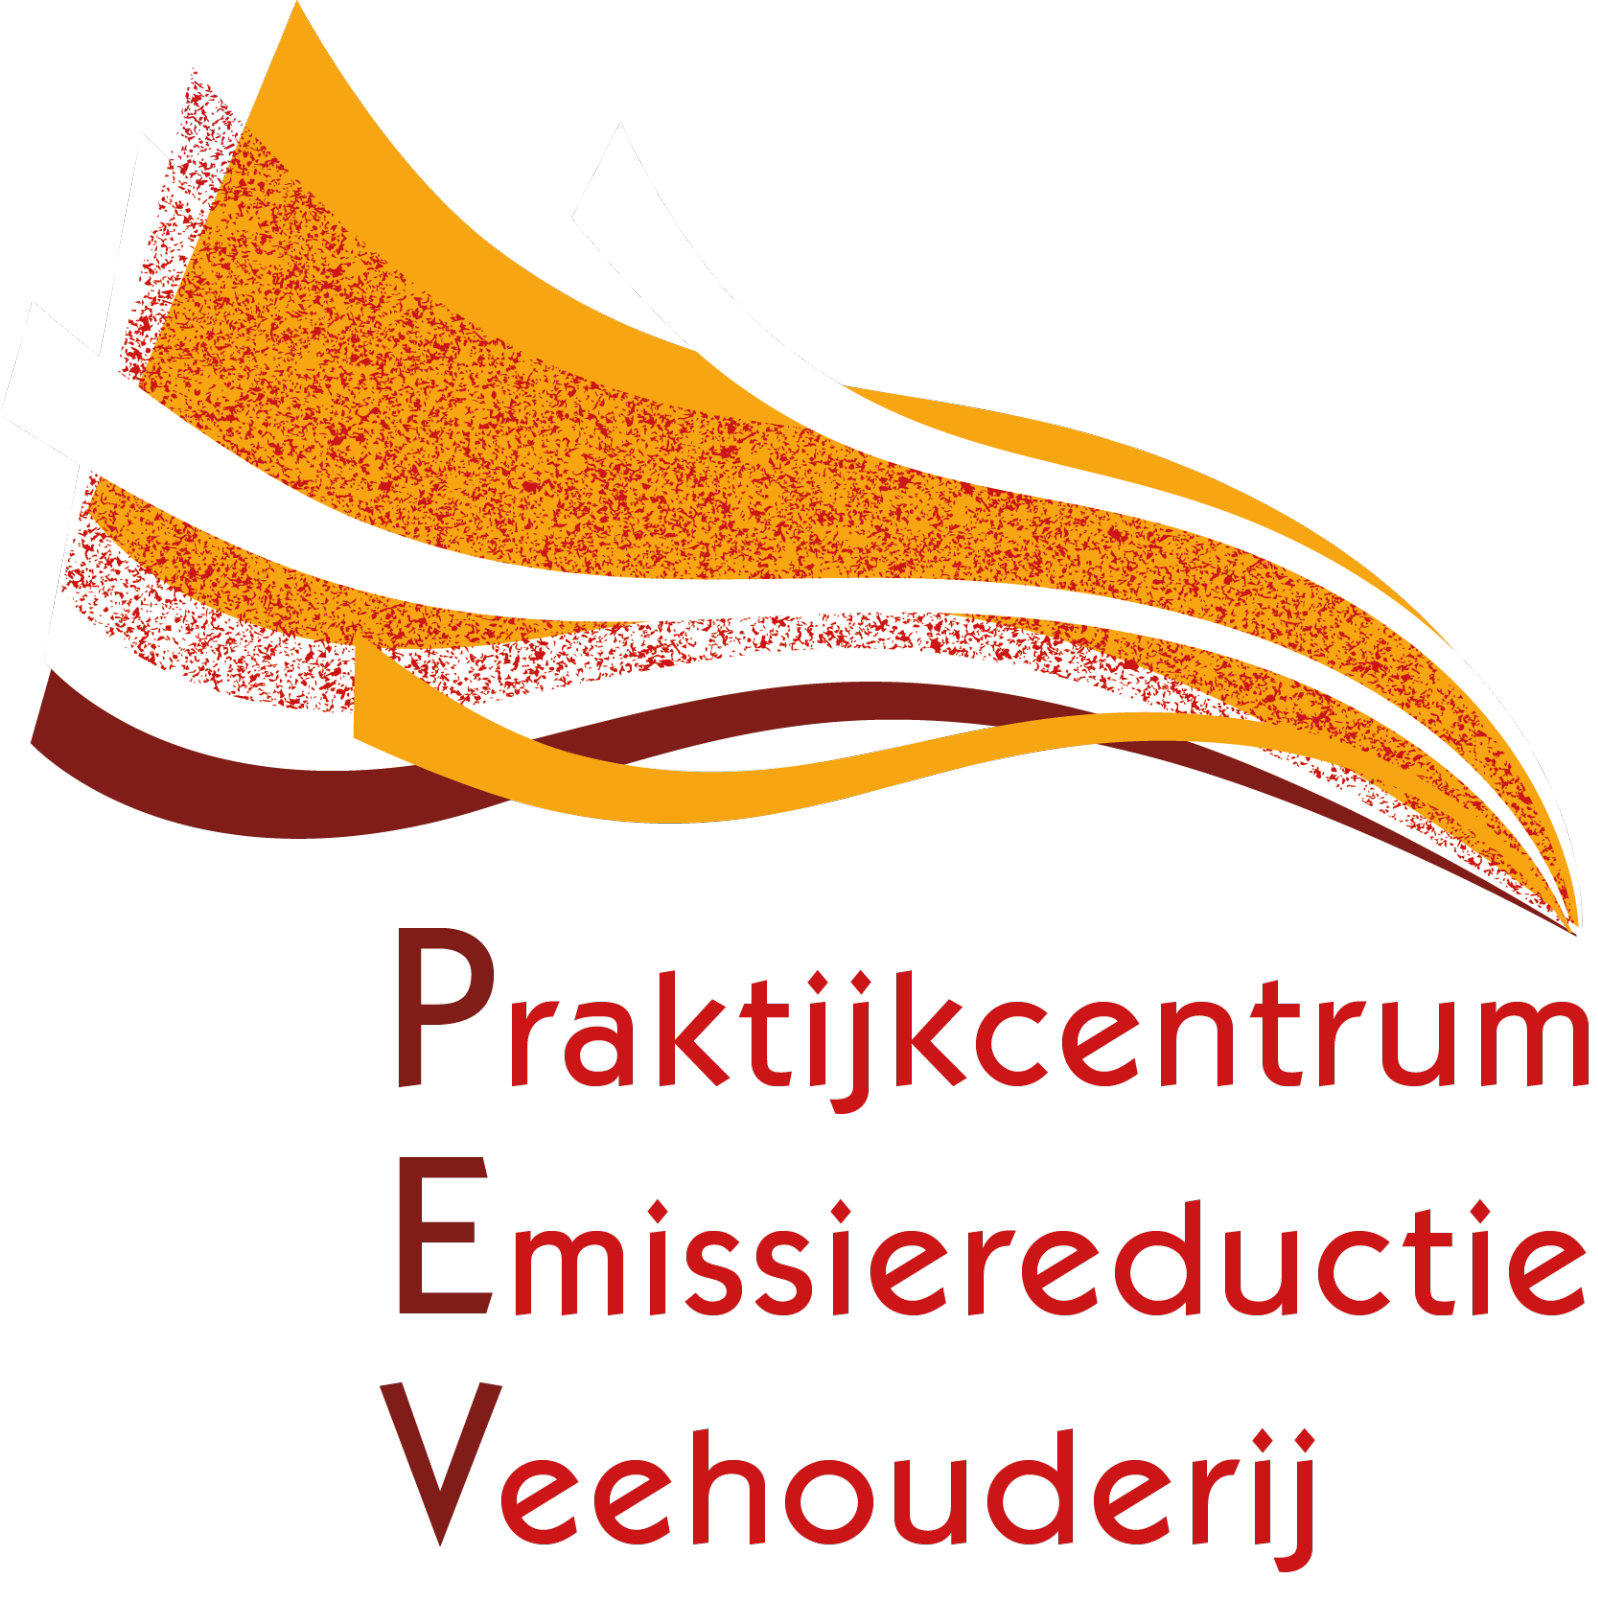 Praktijkcentrum Emissiereductie Veehouderij logo